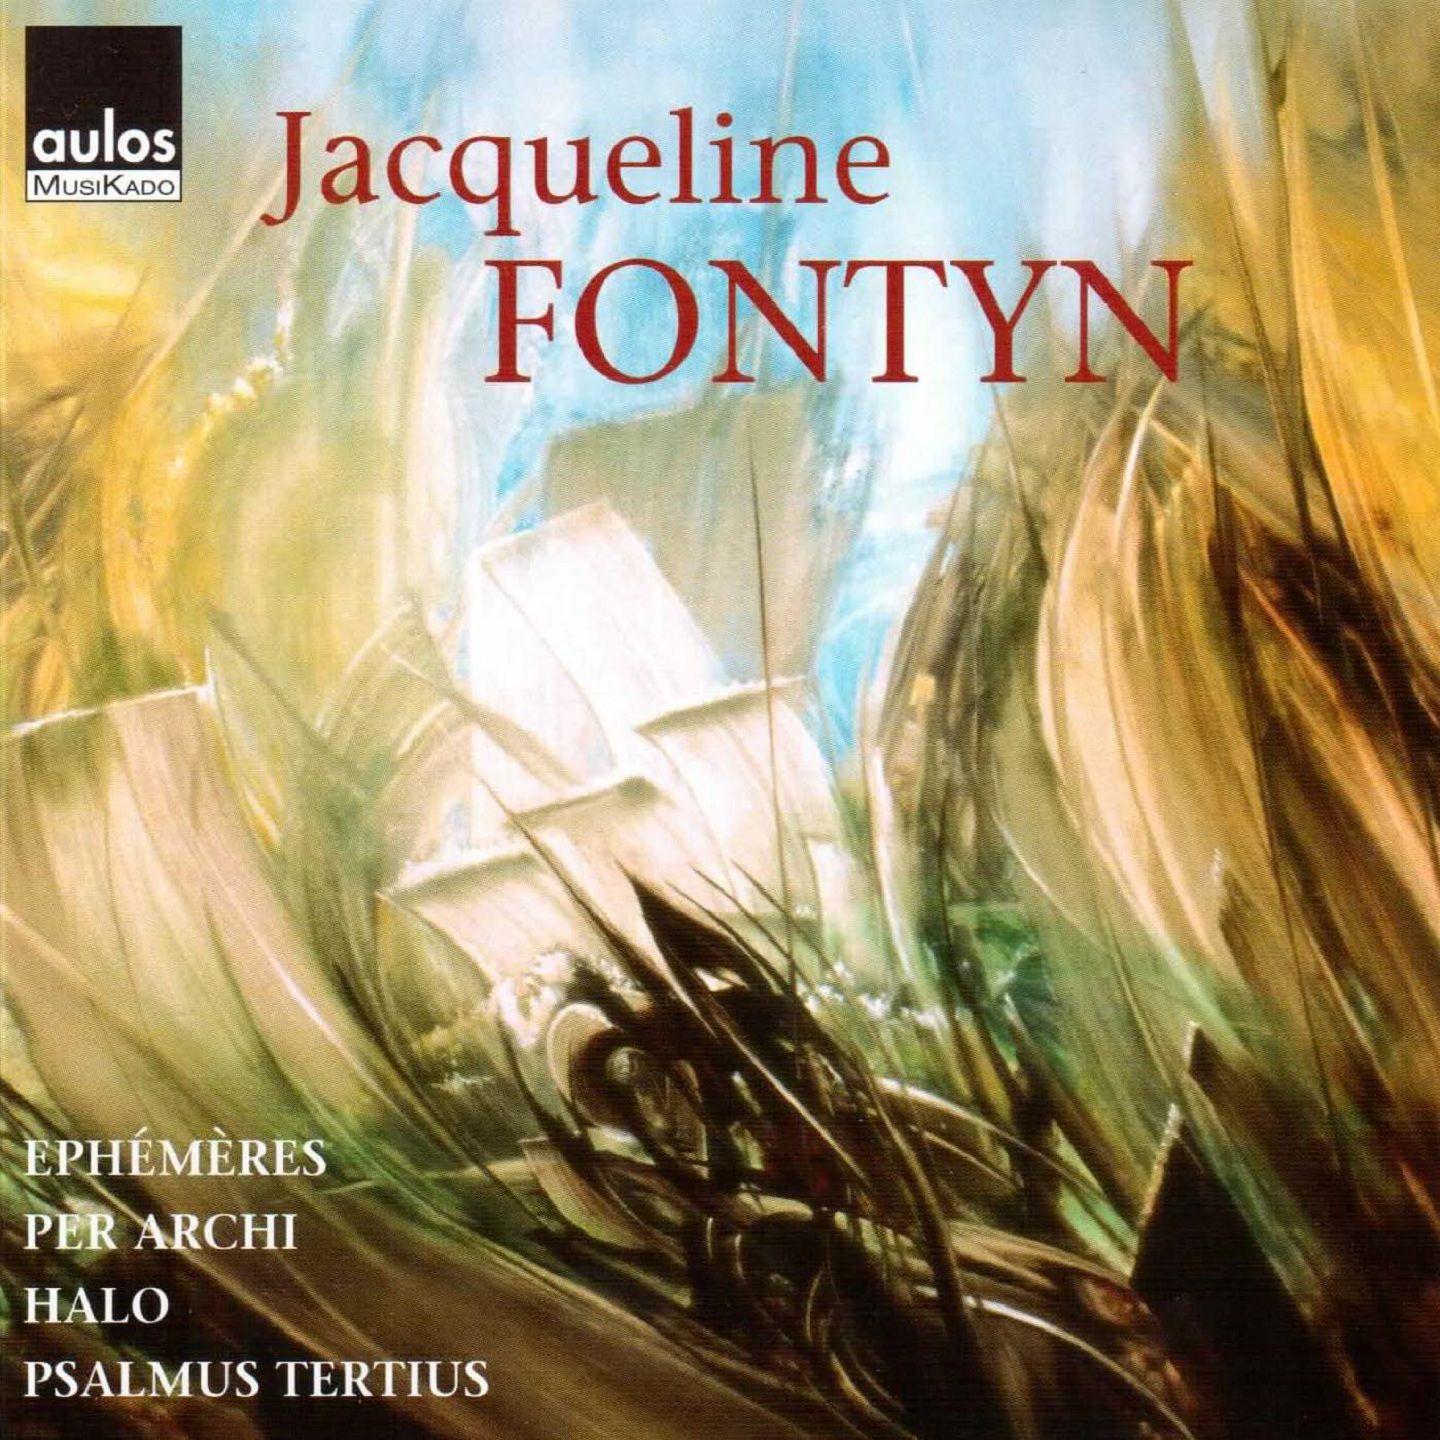 Jacqueline Fontyn: Ephe me res  Per archi  Halo  Psalmus tertius